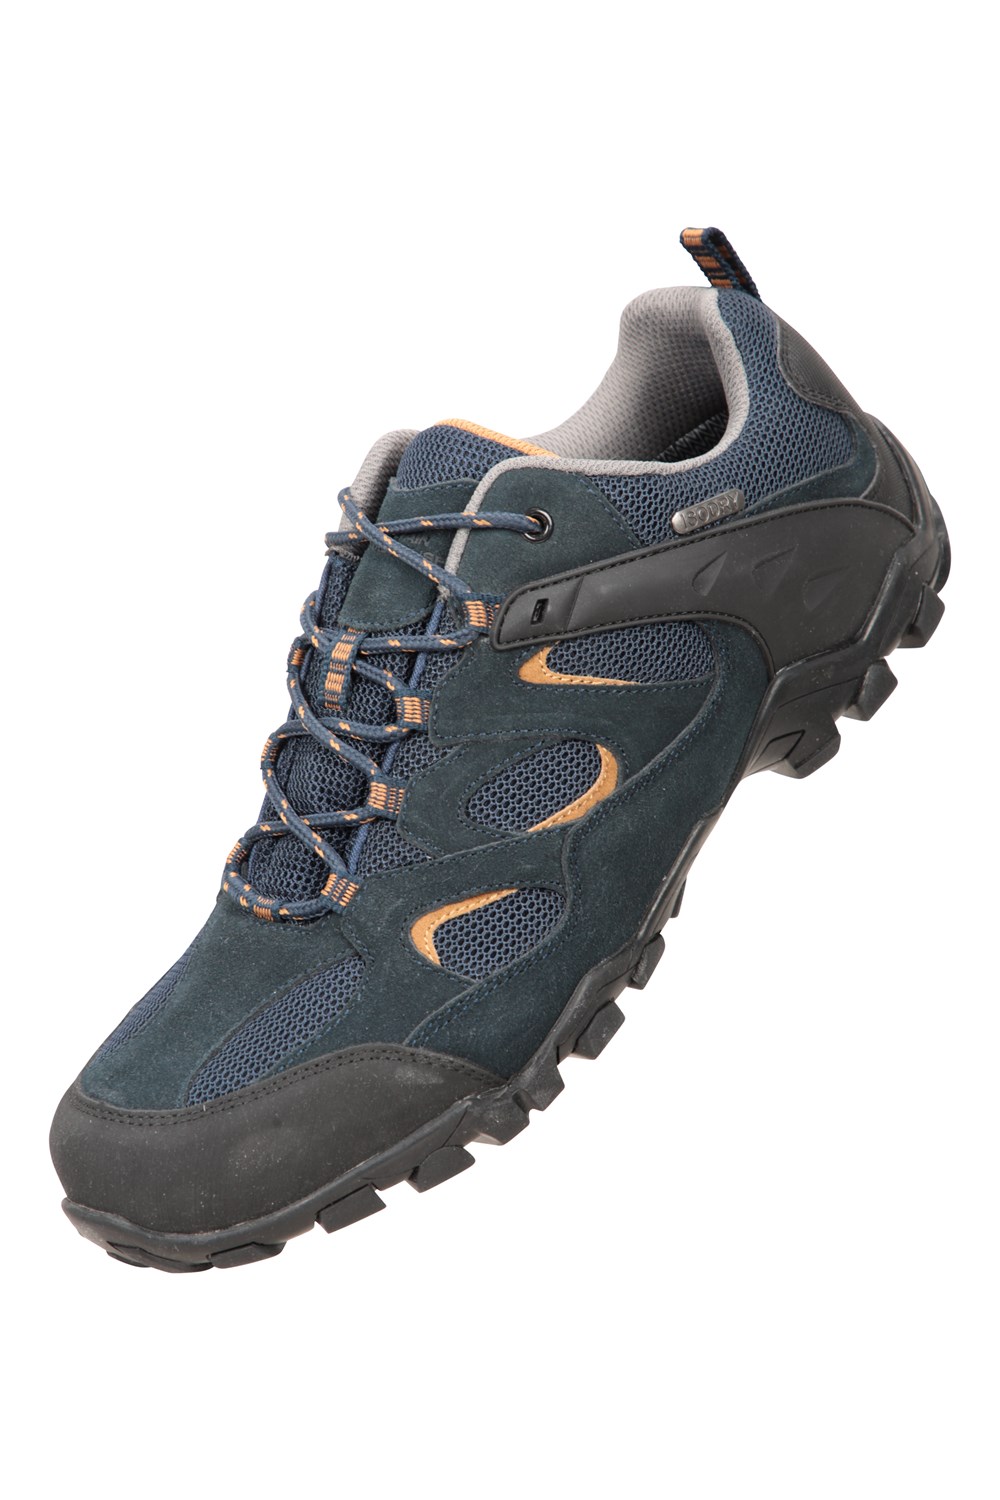 Mountain Warehouse Mens Walking Shoes Waterproof Breathable 100% Rubber ...